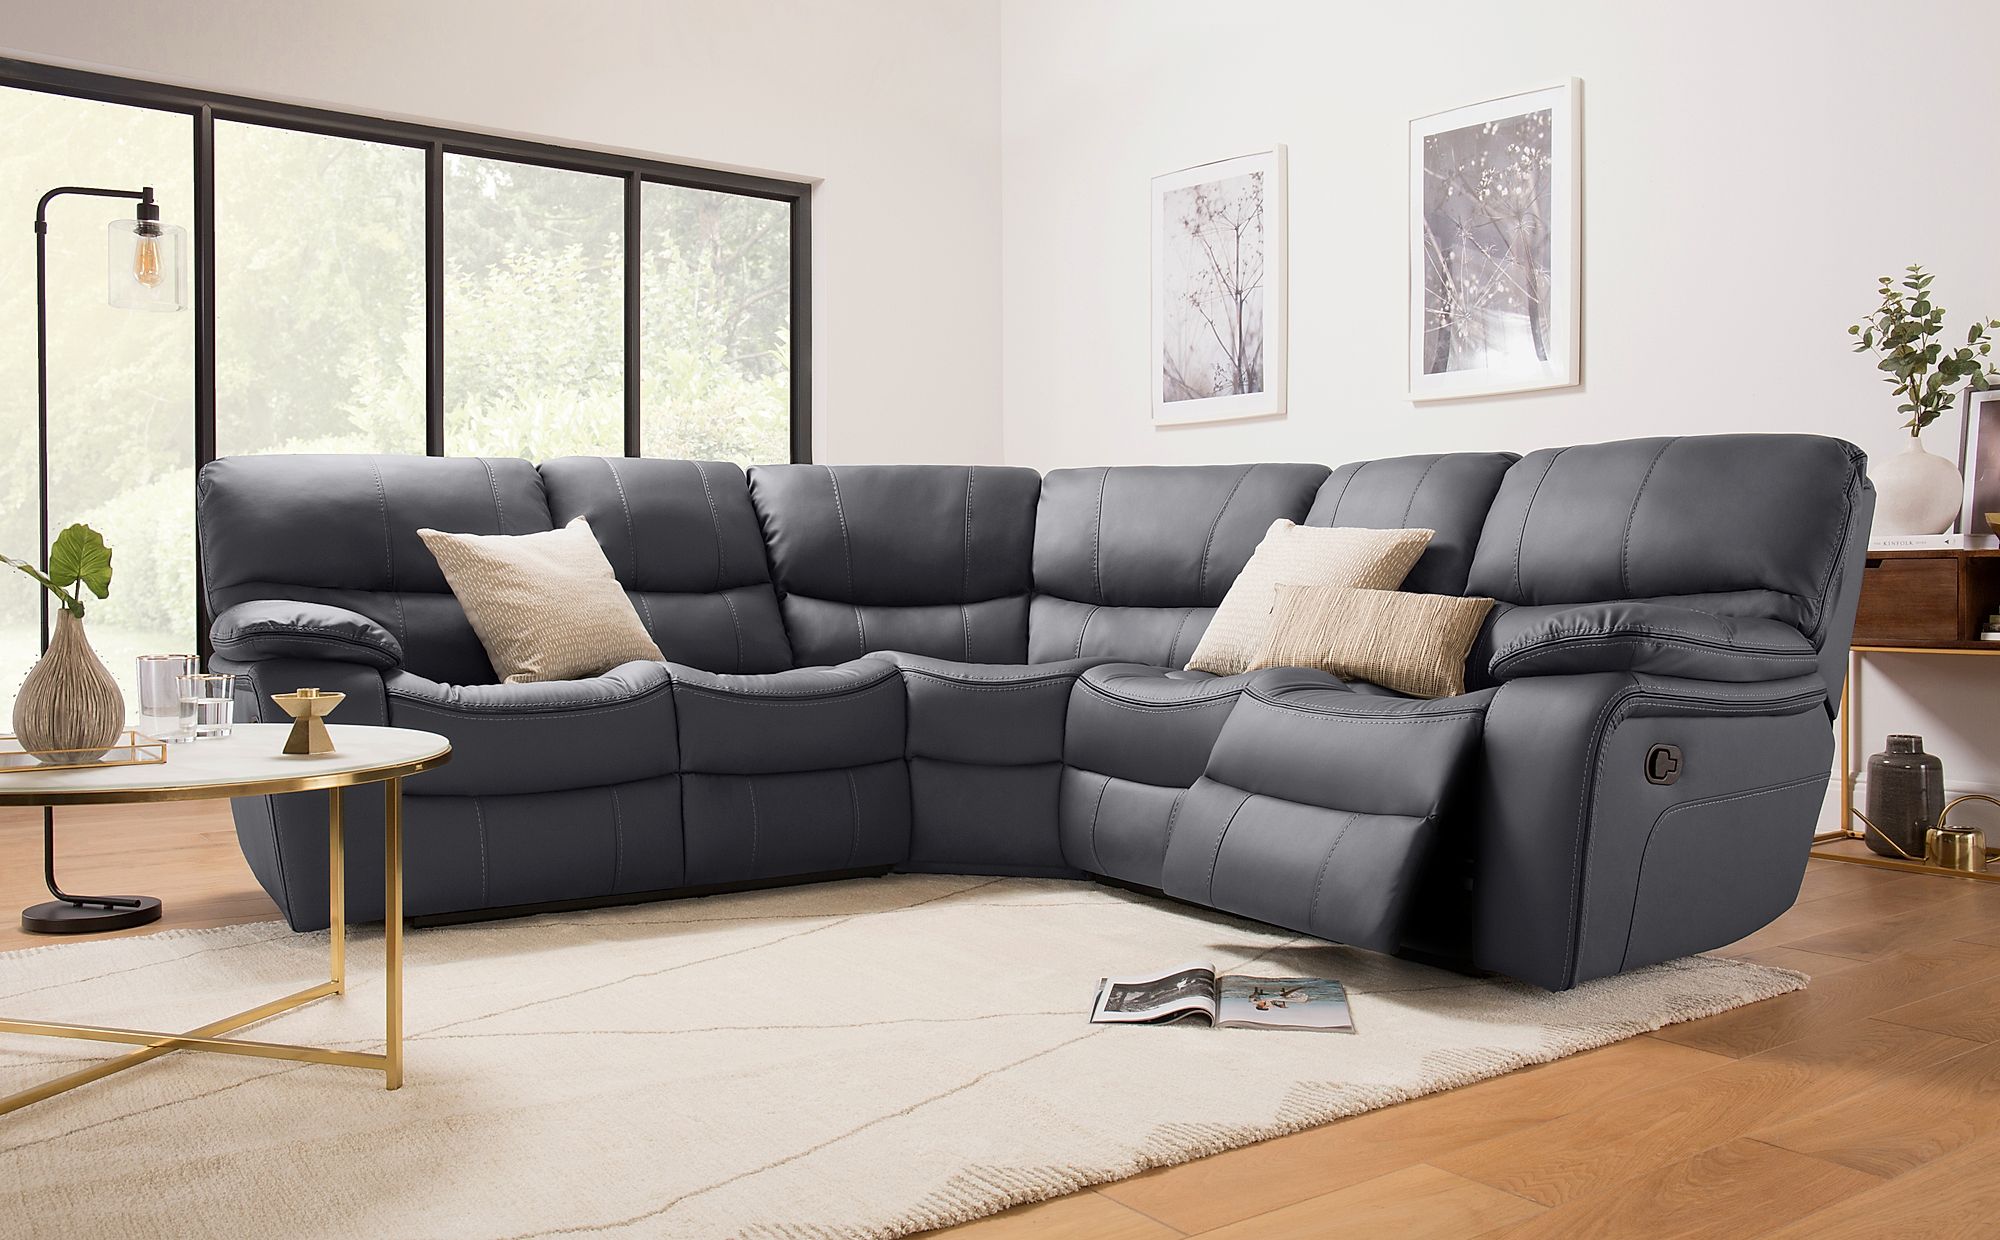 small grey leather sofa uk